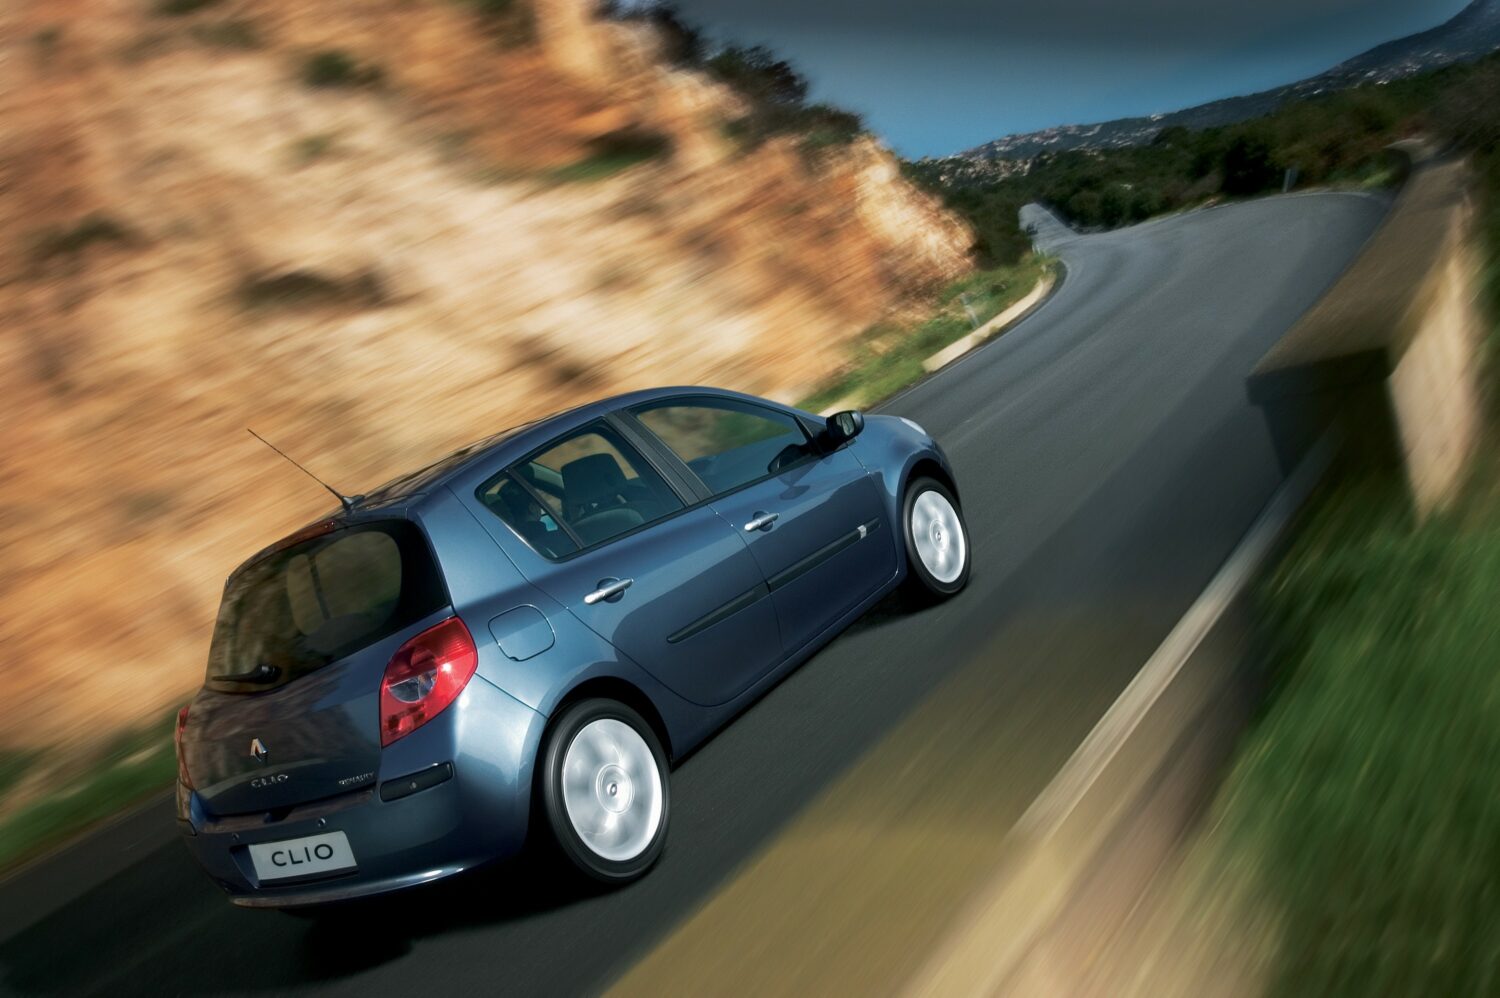 2020 - 30 ans de Renault CLIO - Renault CLIO III (2005-2012)